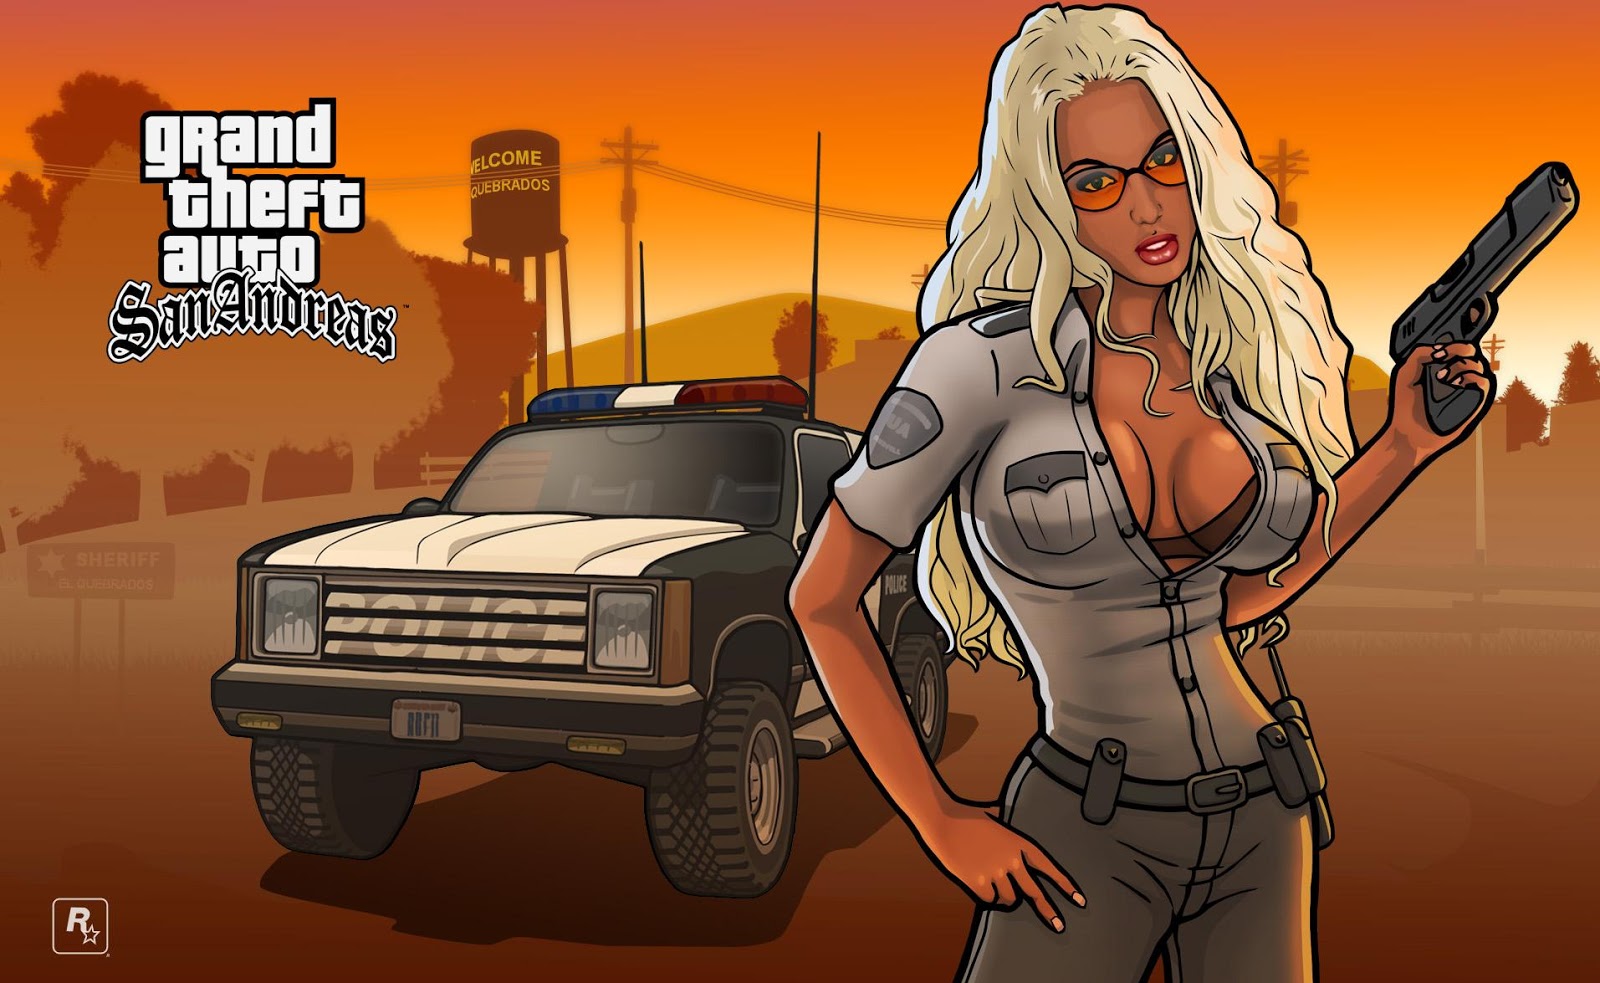 Grand Theft Auto: San Andreas Soundtrack 2004